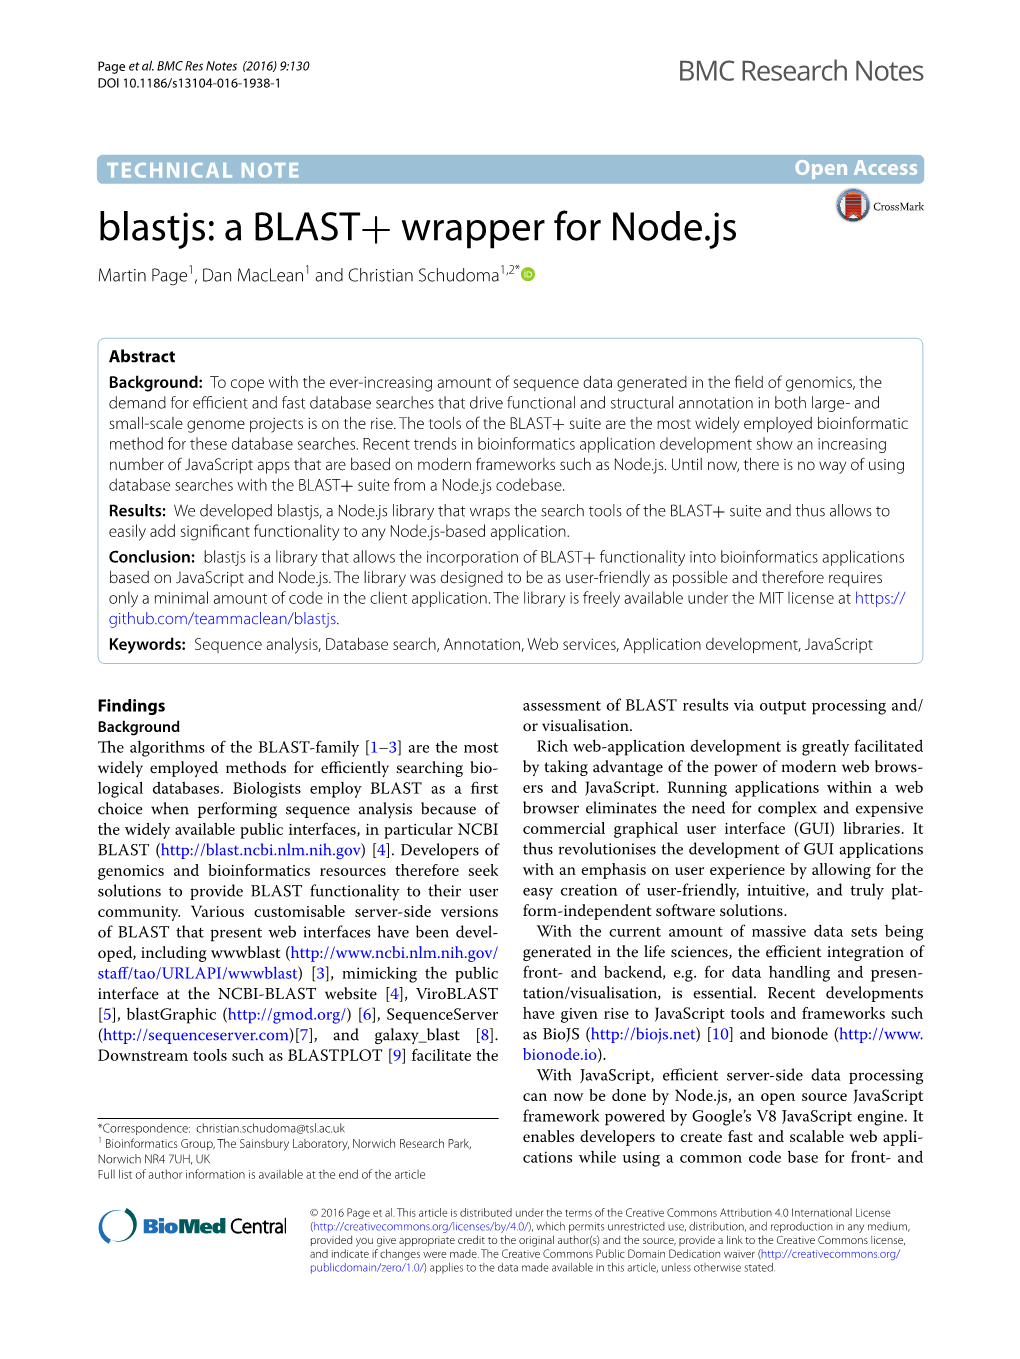 Blastjs: a BLAST+ Wrapper for Node.Js